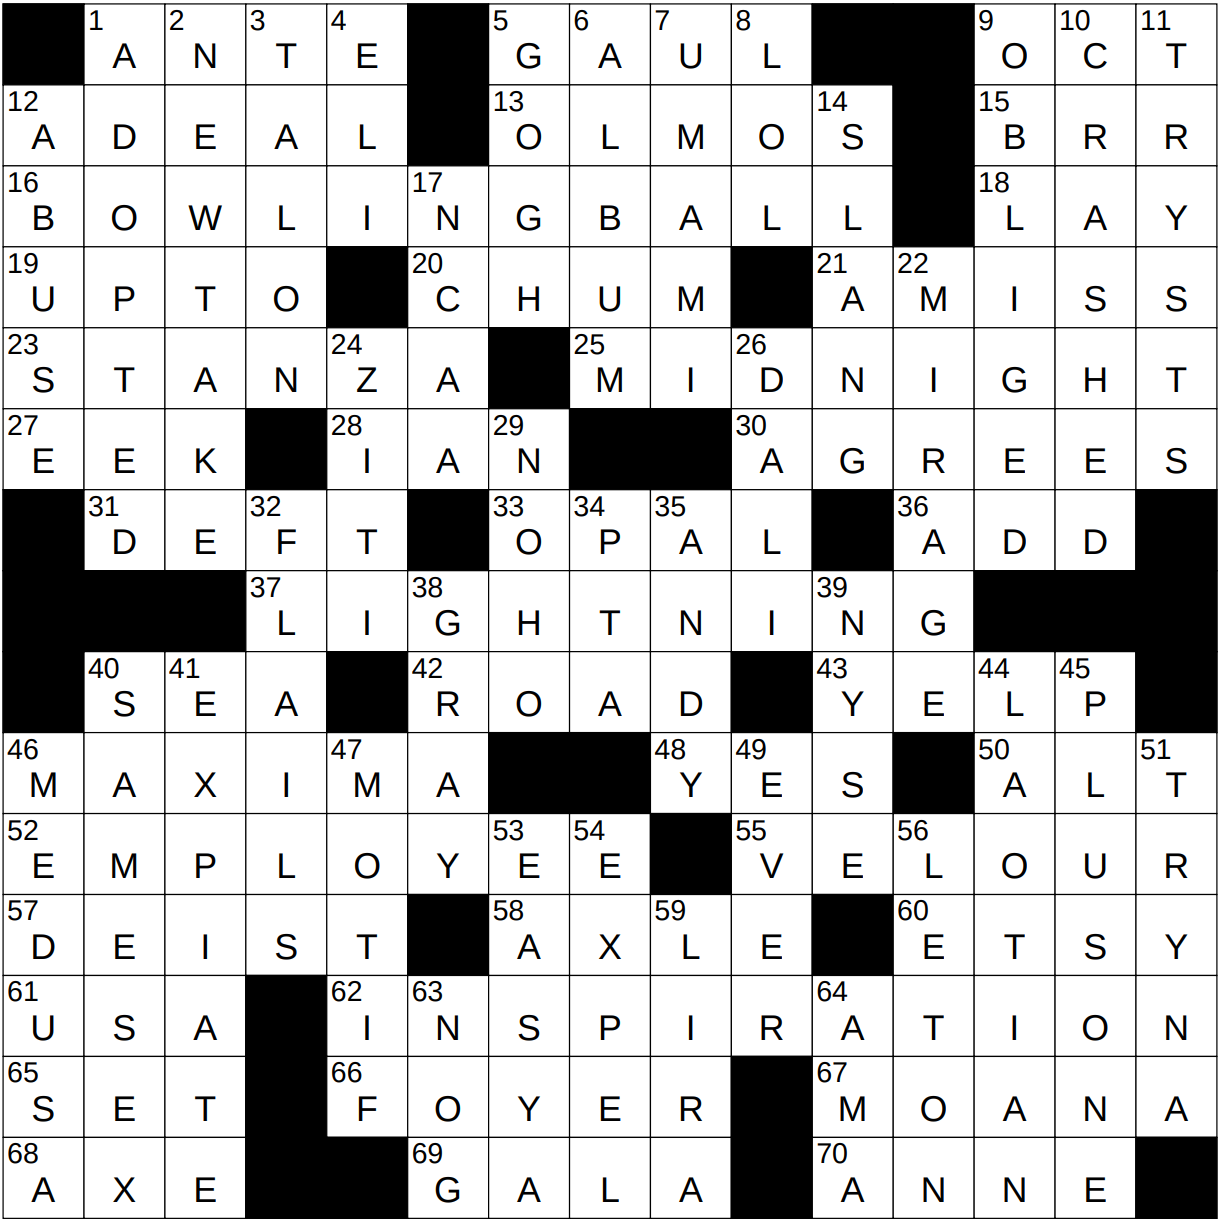 equinox month crossword clue past ff